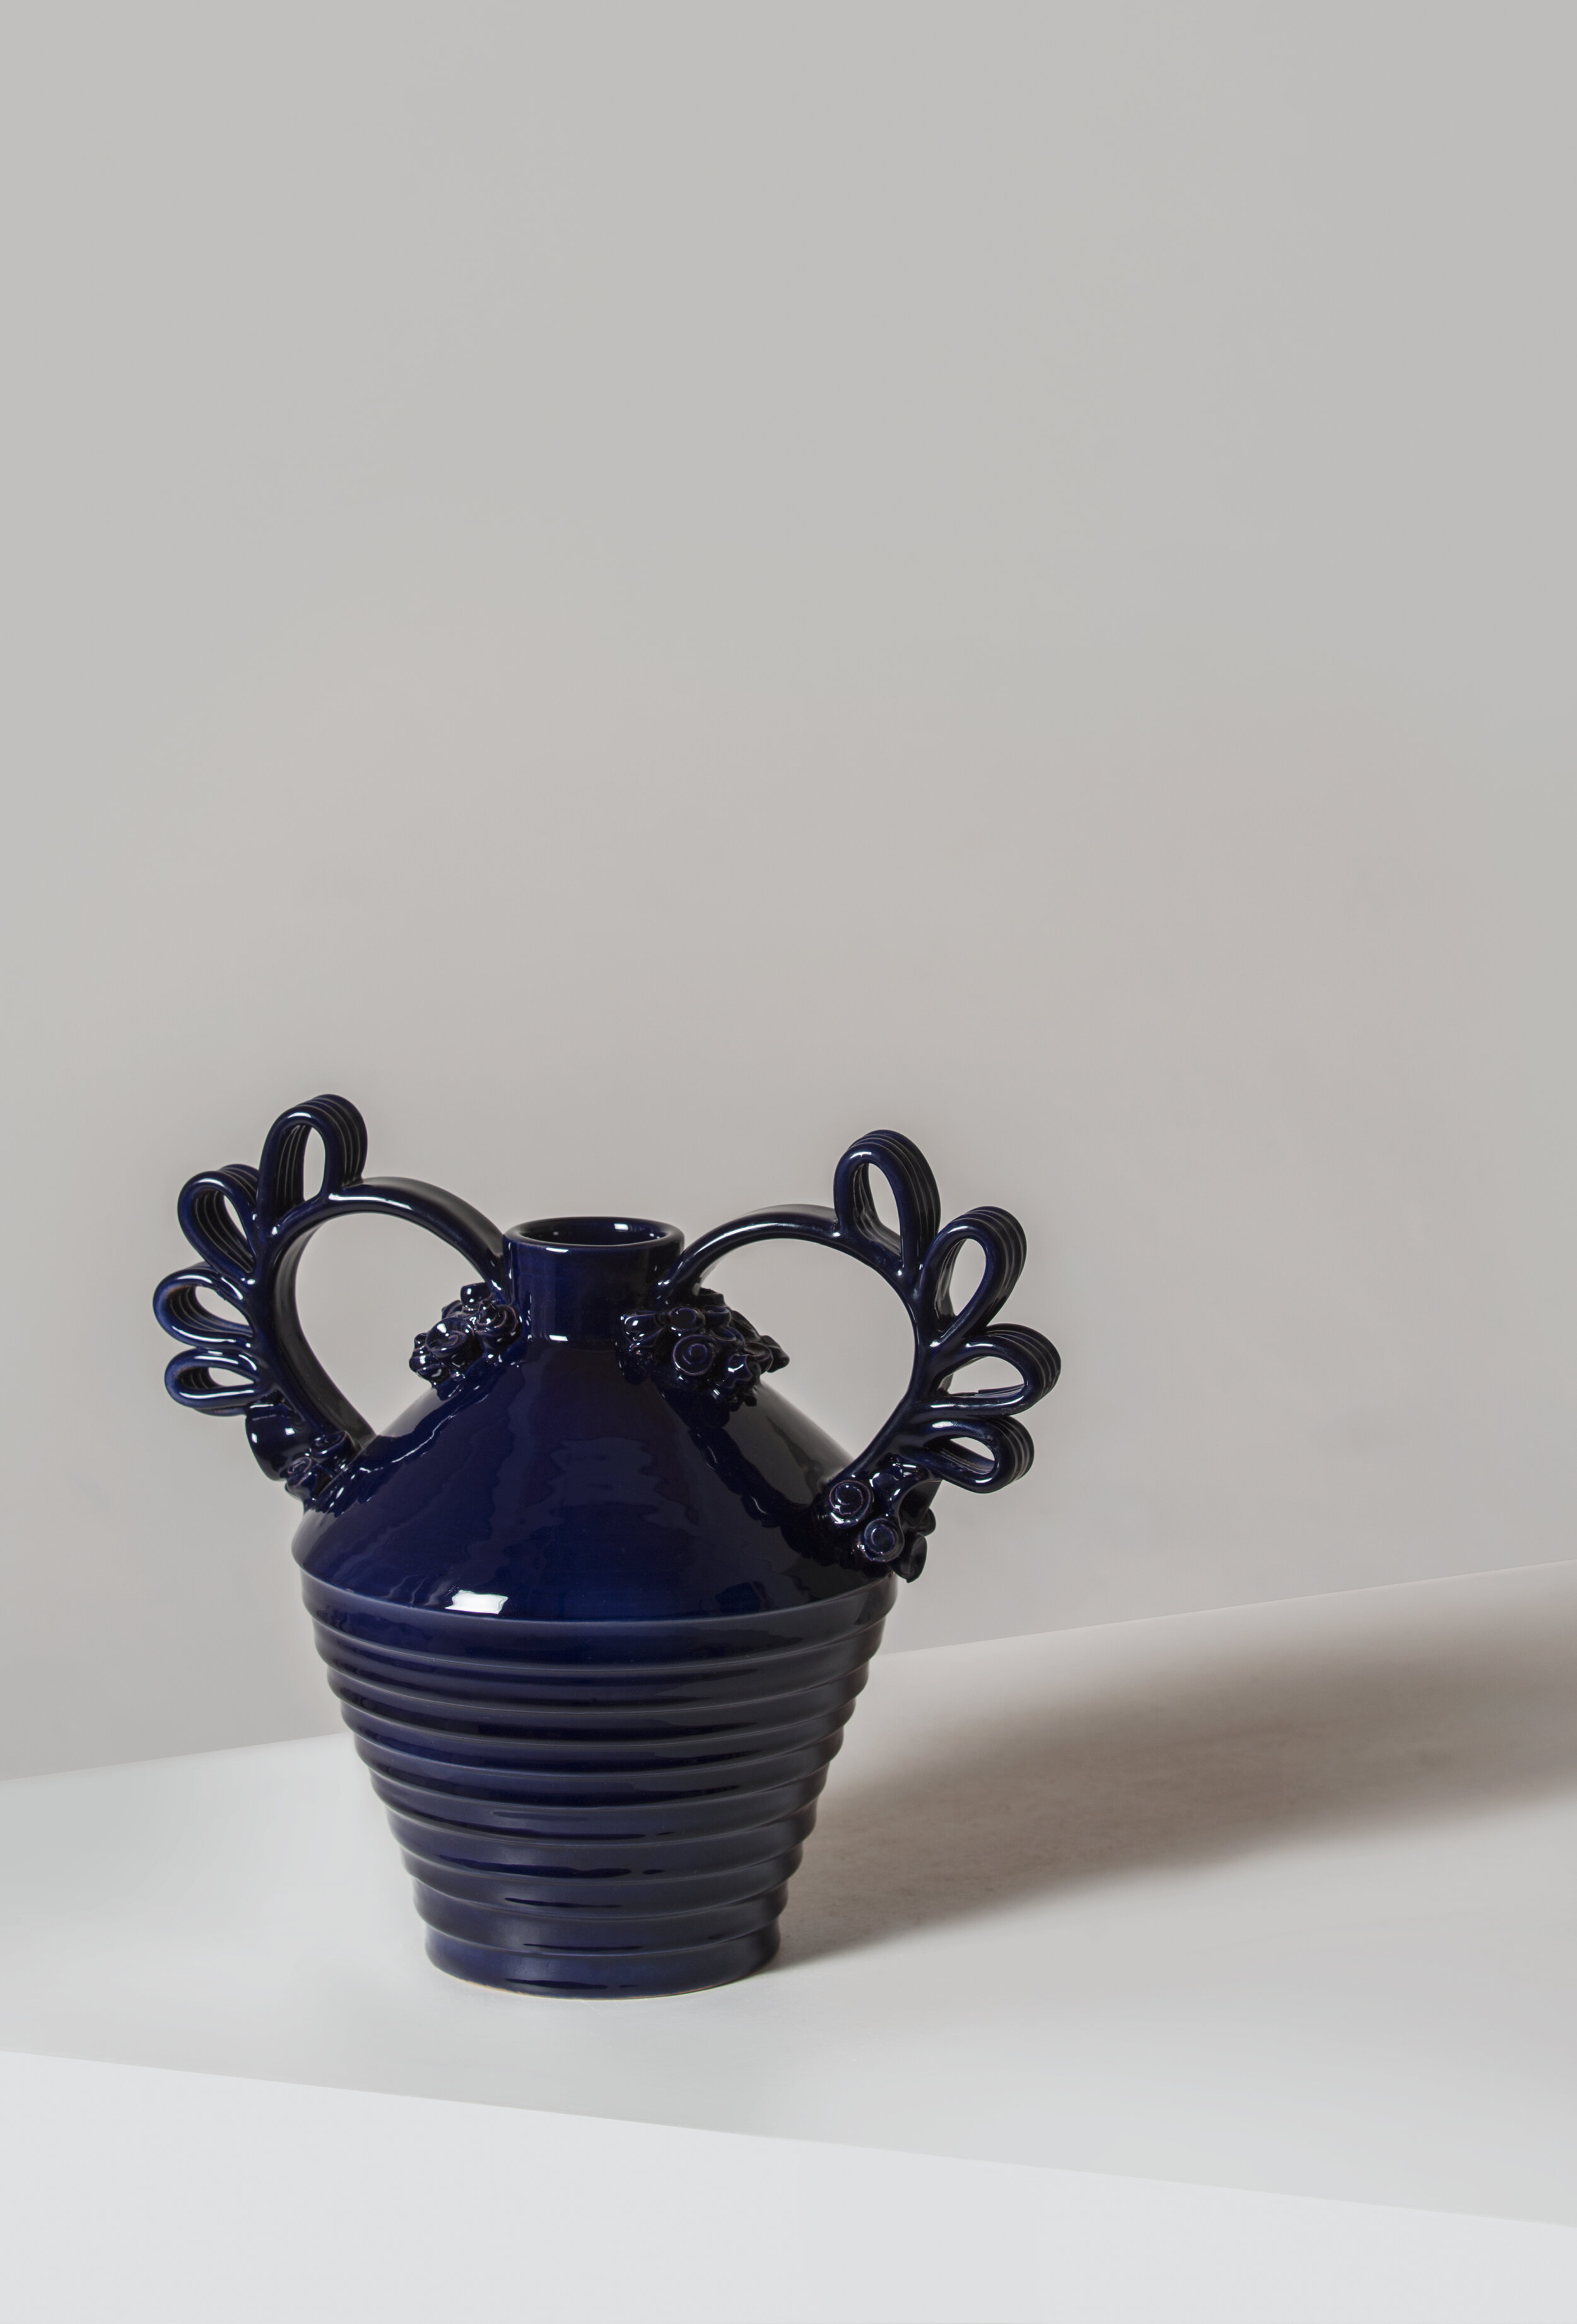 Tunda Vase designed by Valentina Cameranesi, made by Walter Usai for Pretziada_blue.jpg